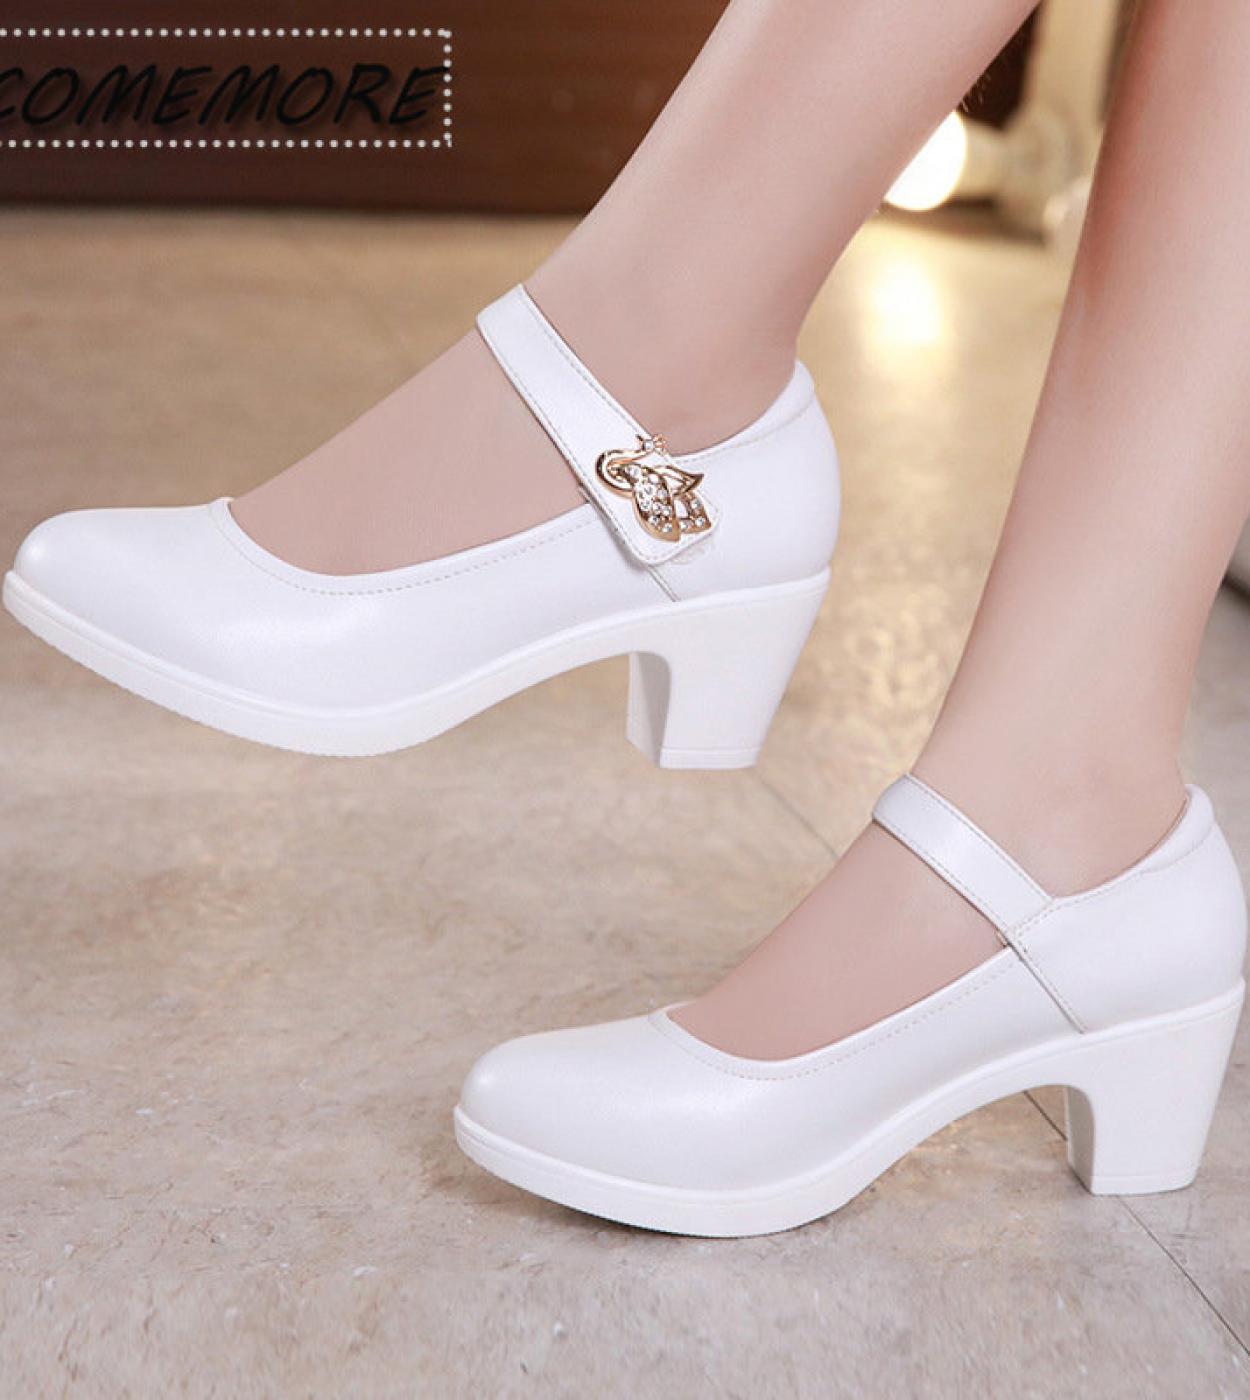 Autumn New Black White Elegant Middle Heel Ladies Wedding Bride High Heels Shoes Women Pumps Small Plus Size 33 43 Tacon